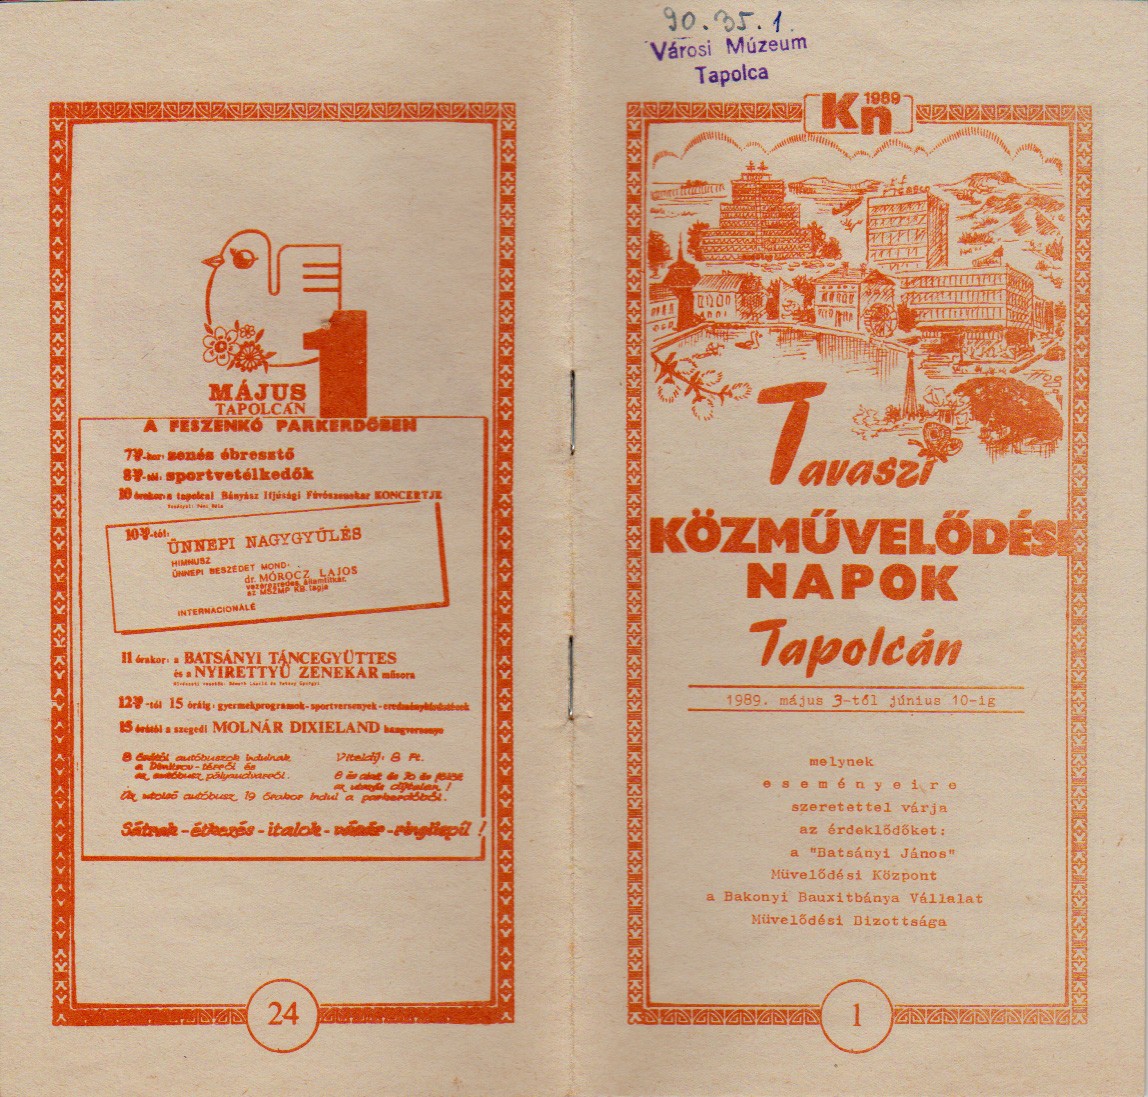 Tapolcai kulturális műsorfüzet 1989 (Tapolcai Városi Múzeum CC BY-NC-SA)